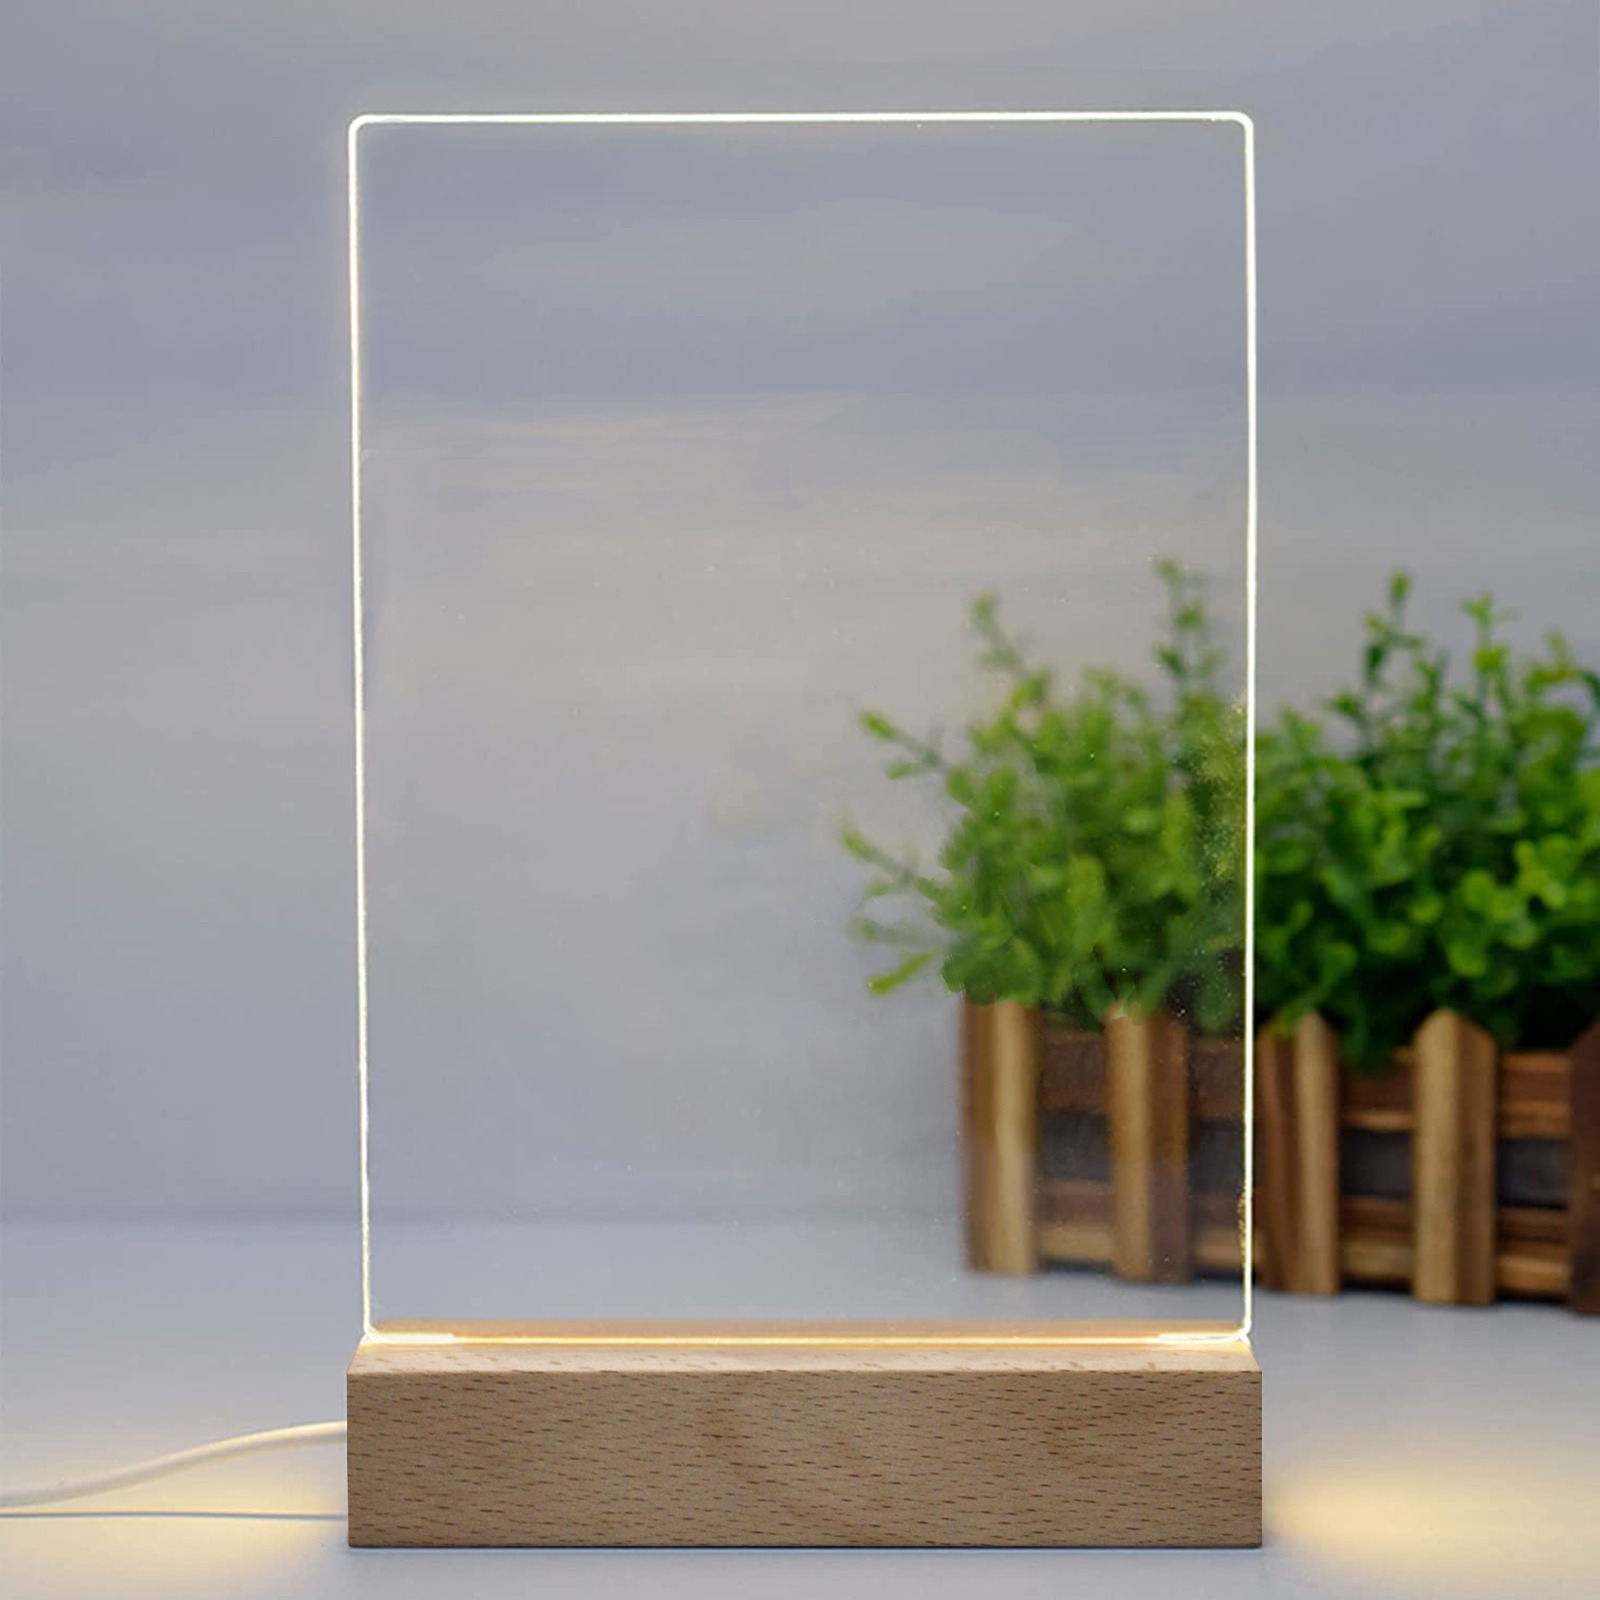 Square Acrylic Photo Panel with Light Base